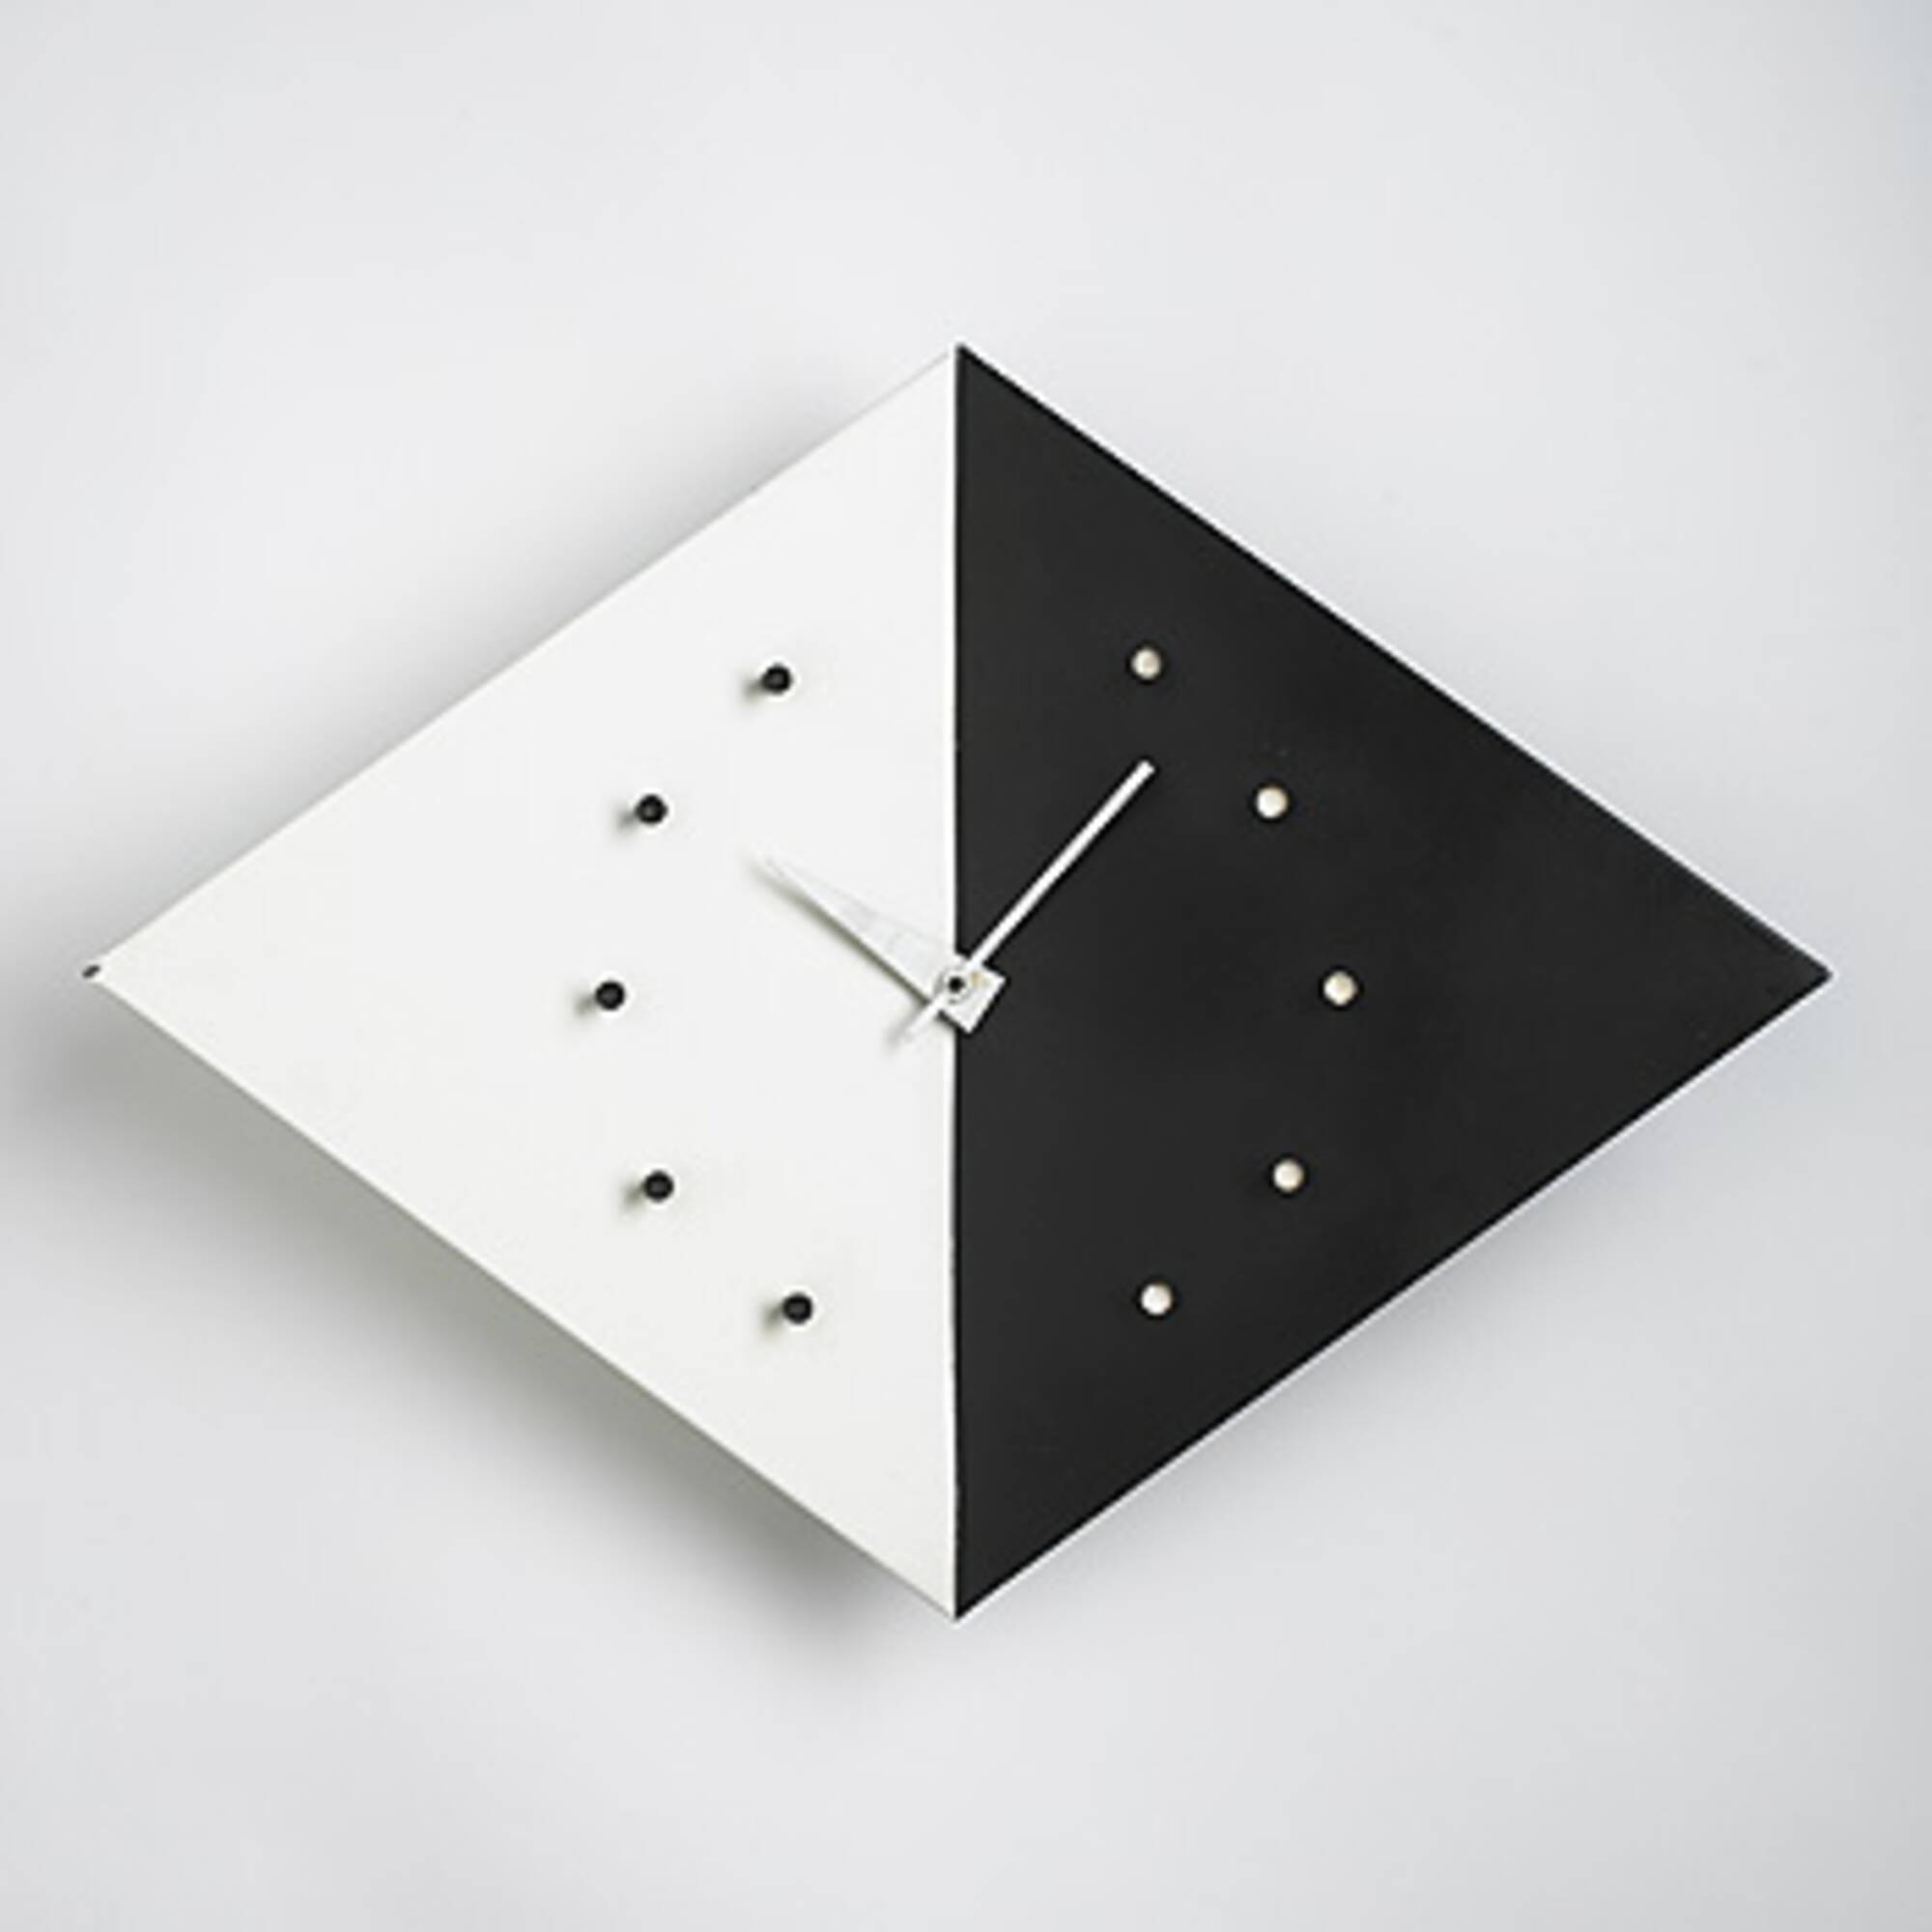 422: GEORGE NELSON & ASSOCIATES, Kite wall clock, model #2201-D